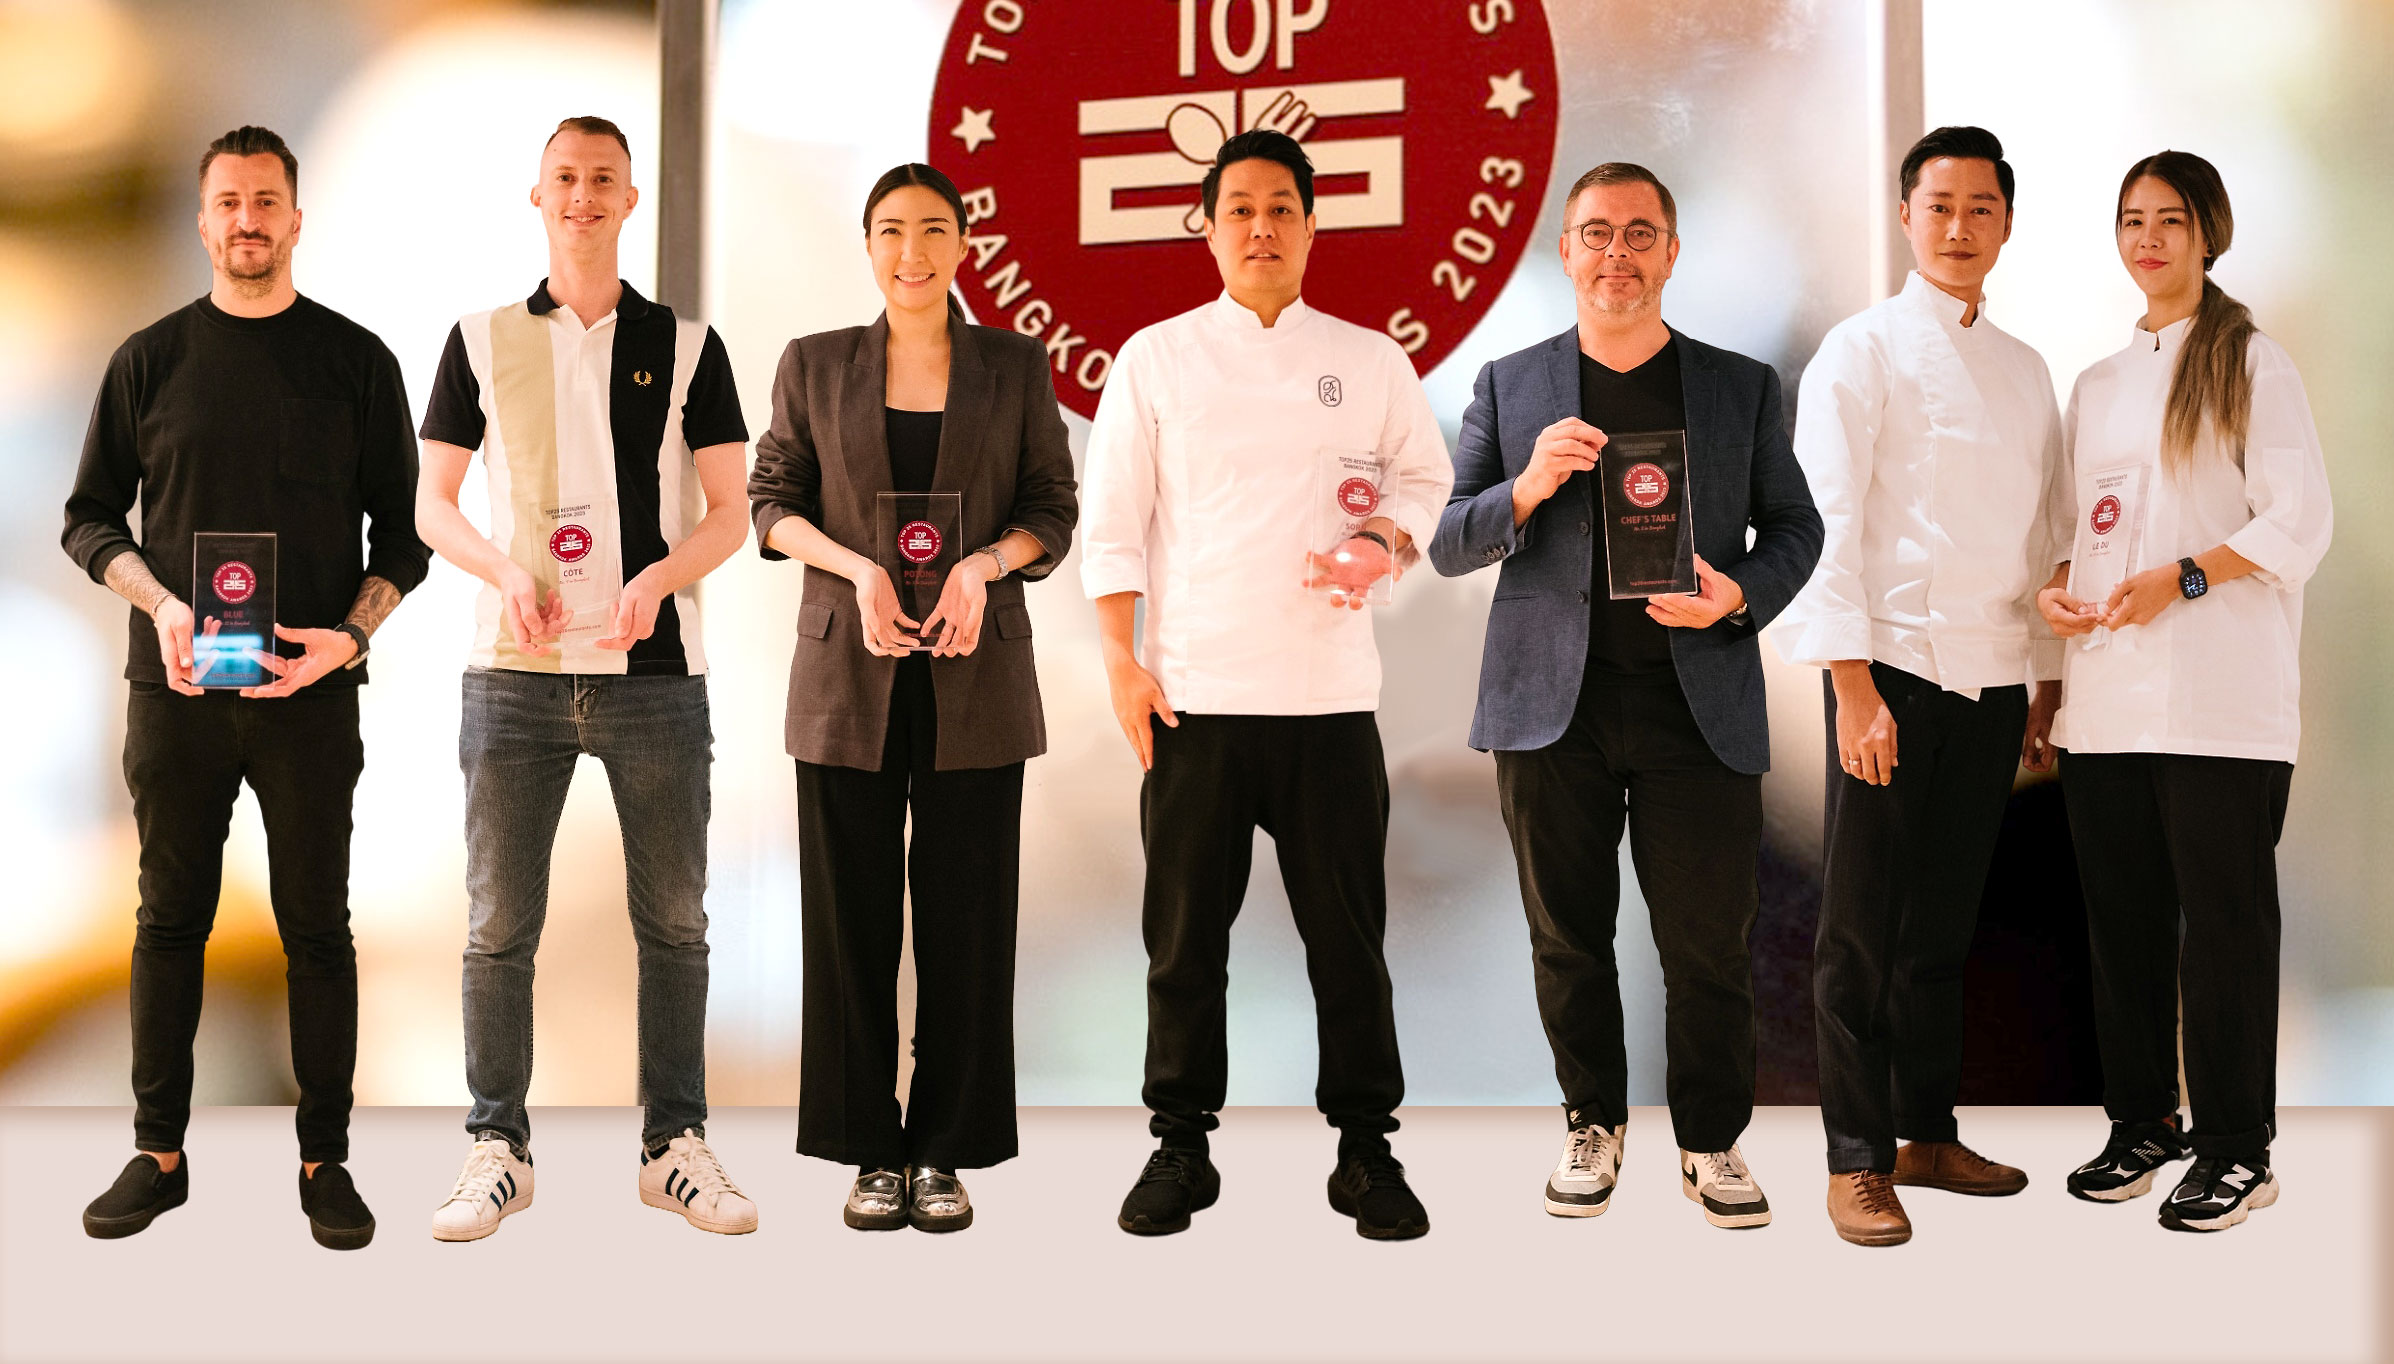 1 Top25 Restaurants Chefs Group Photo 